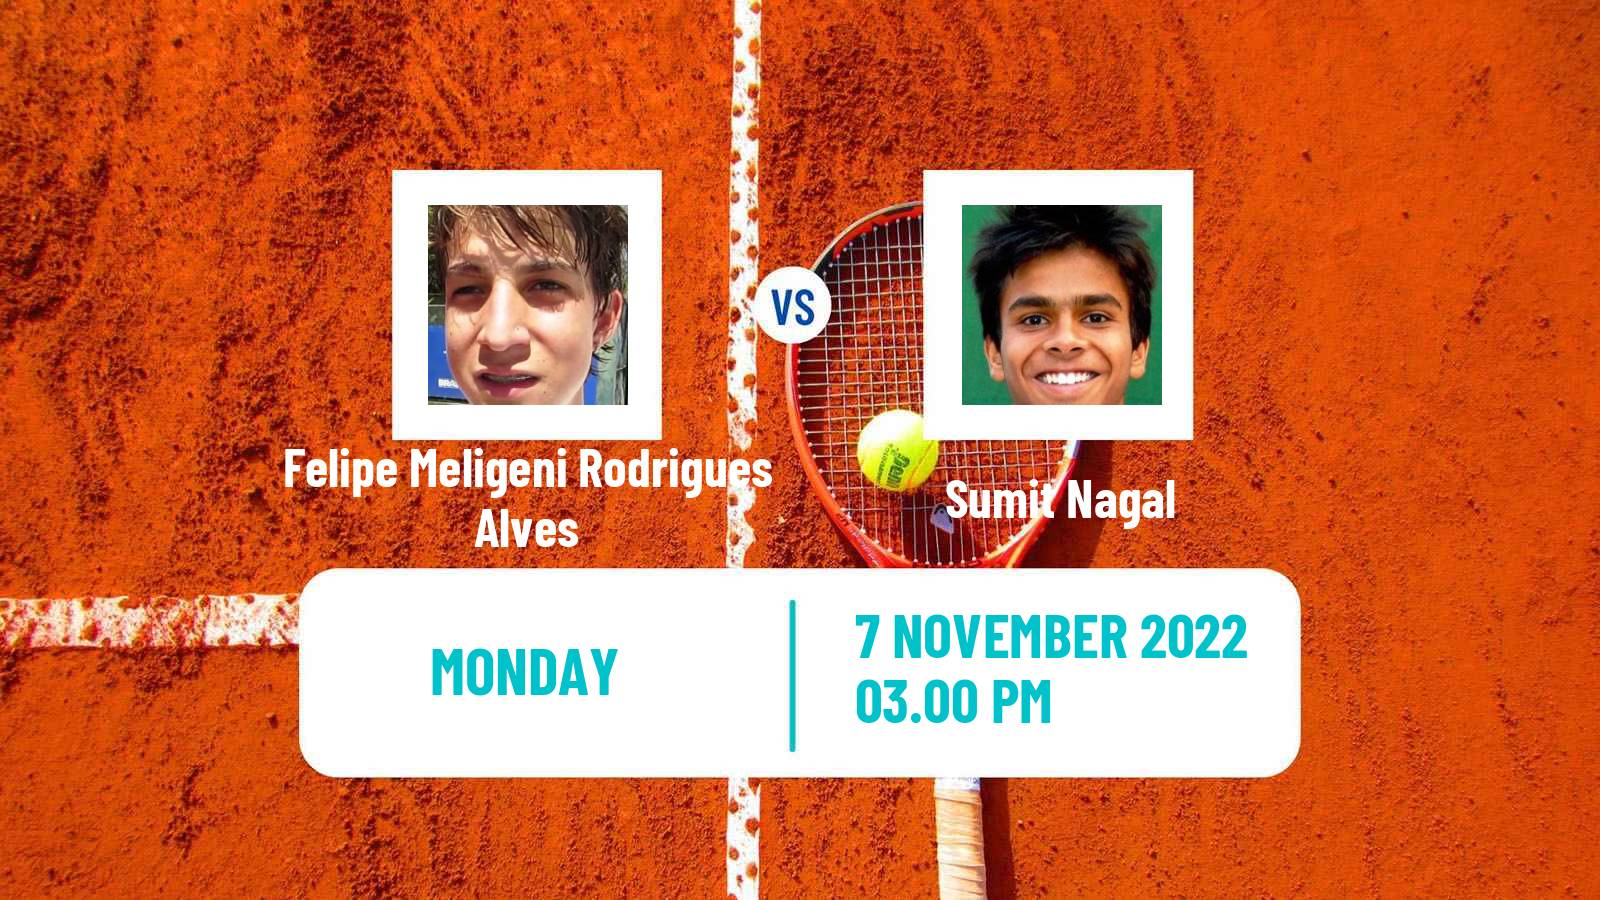 Tennis ATP Challenger Felipe Meligeni Rodrigues Alves - Sumit Nagal